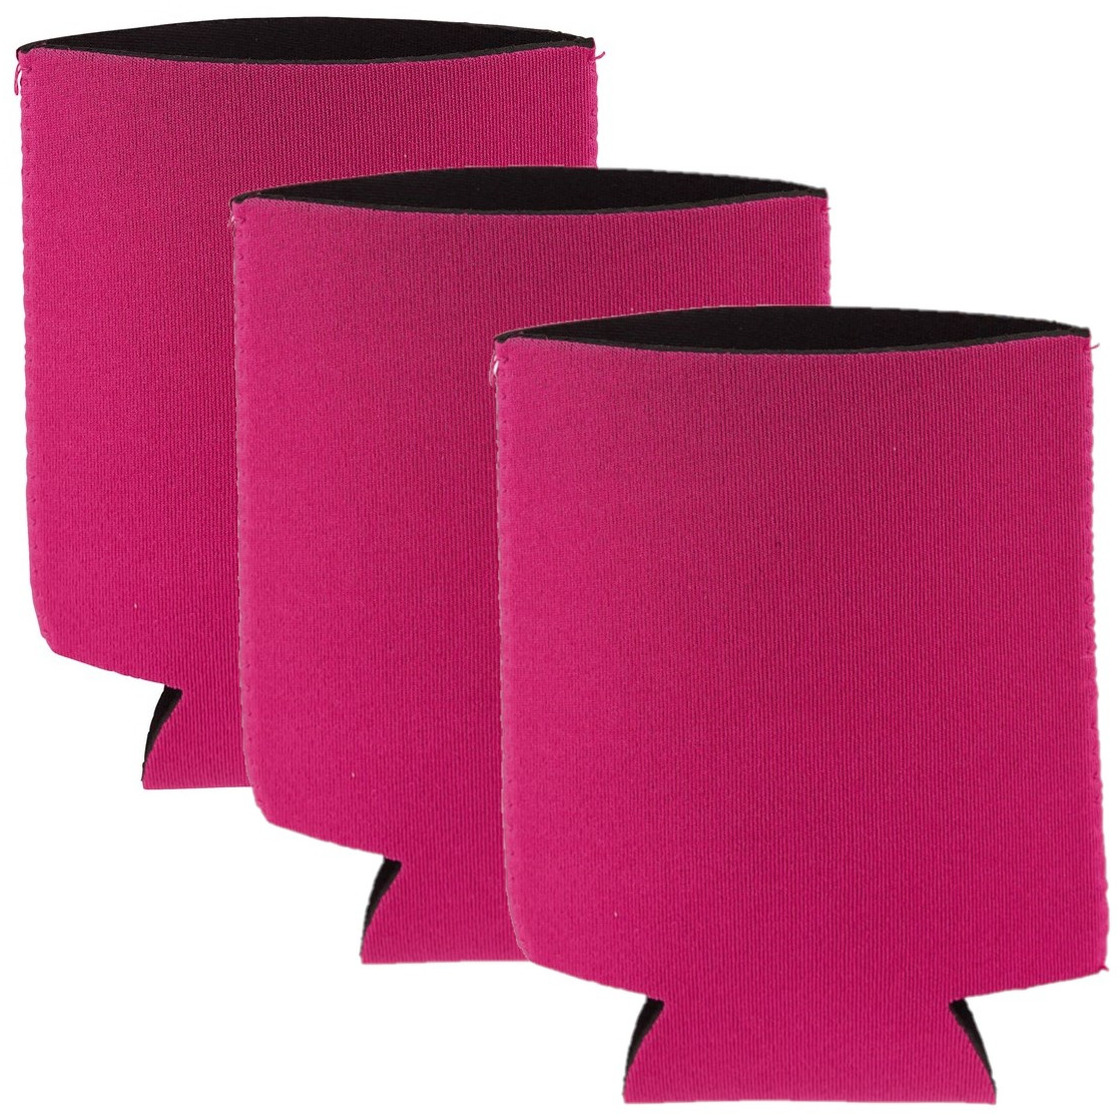 Voordeelset van 12x stuks opvouwbare blikjeskoelers- koel hoesjes fuchsia roze